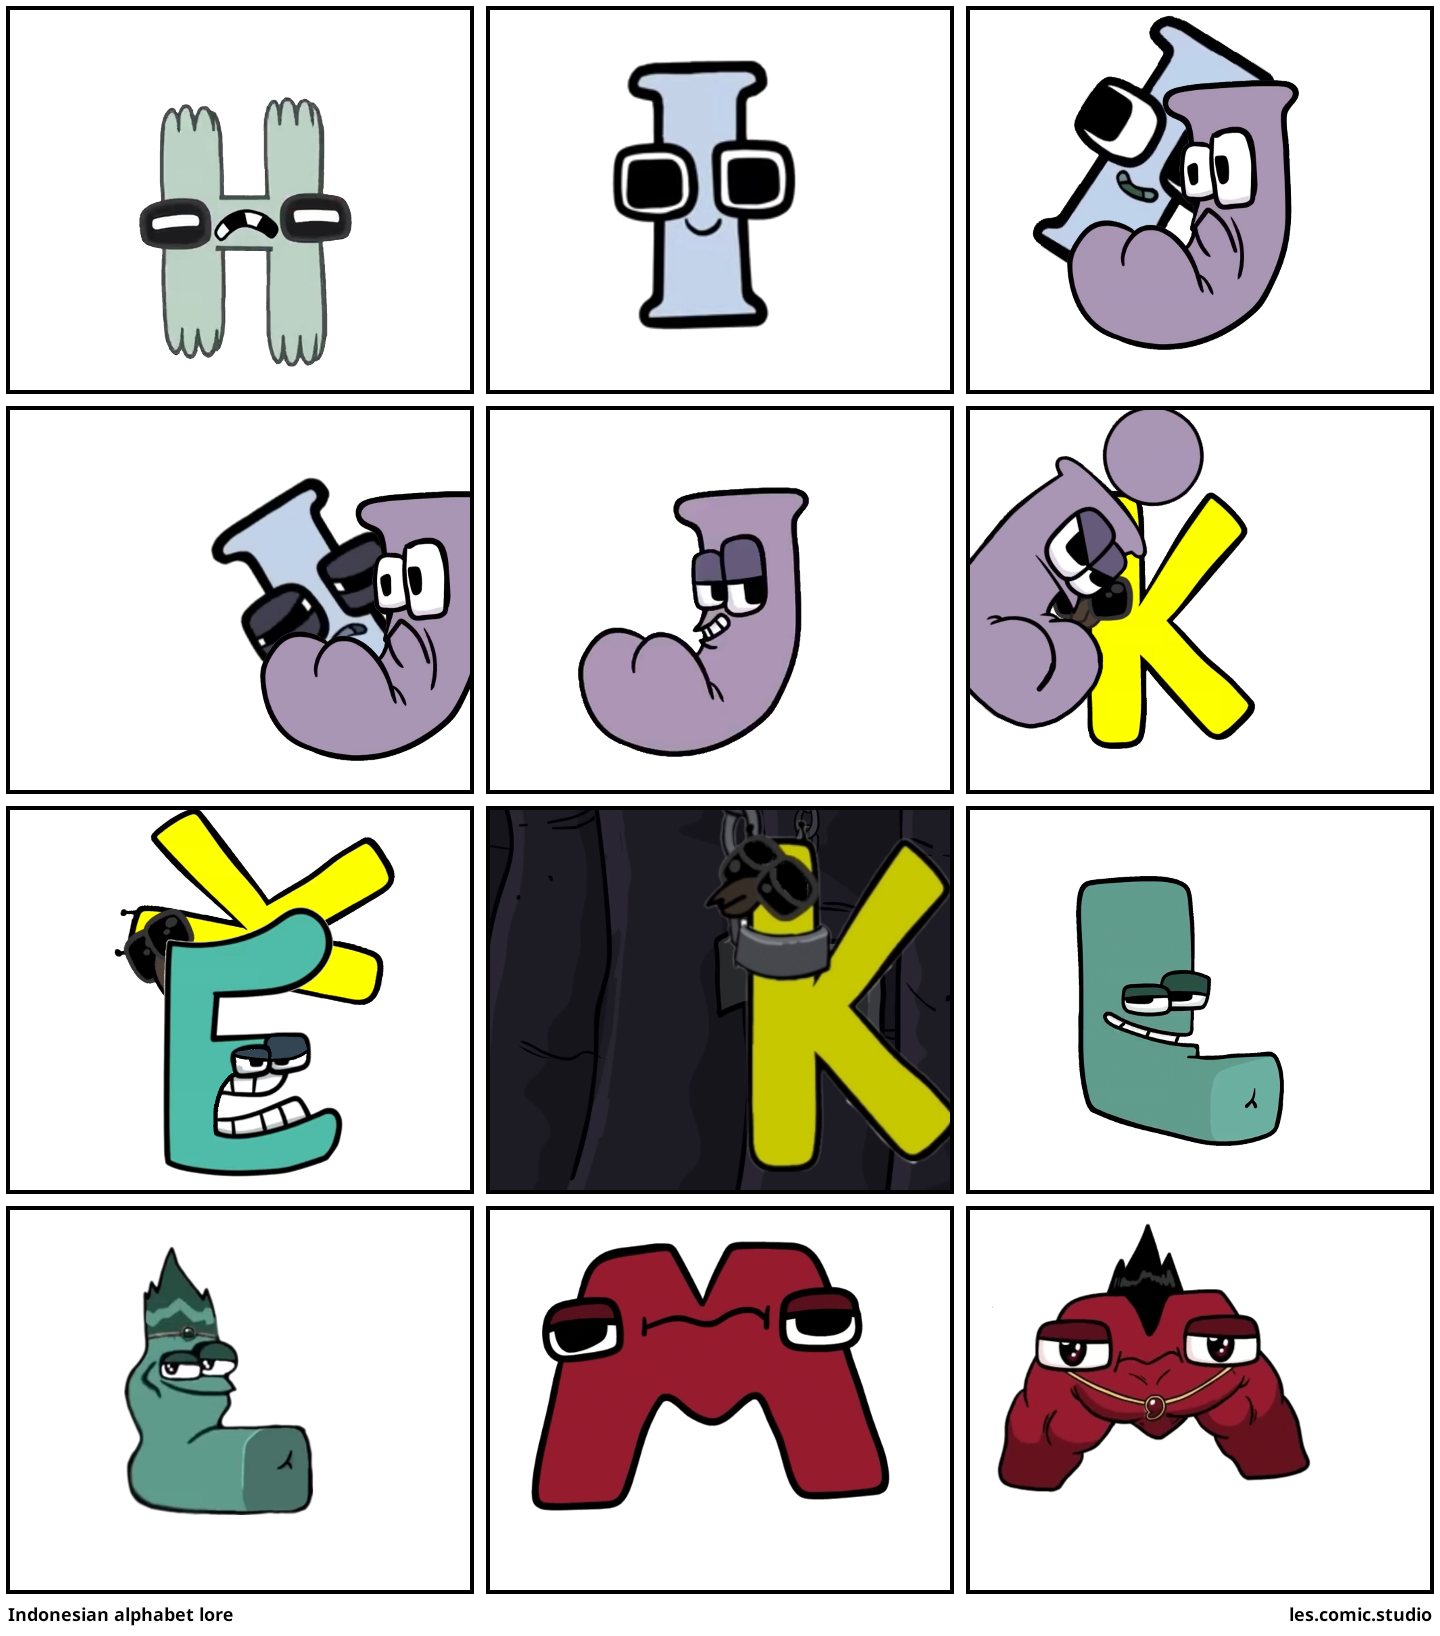 Indonesian alphabet lore